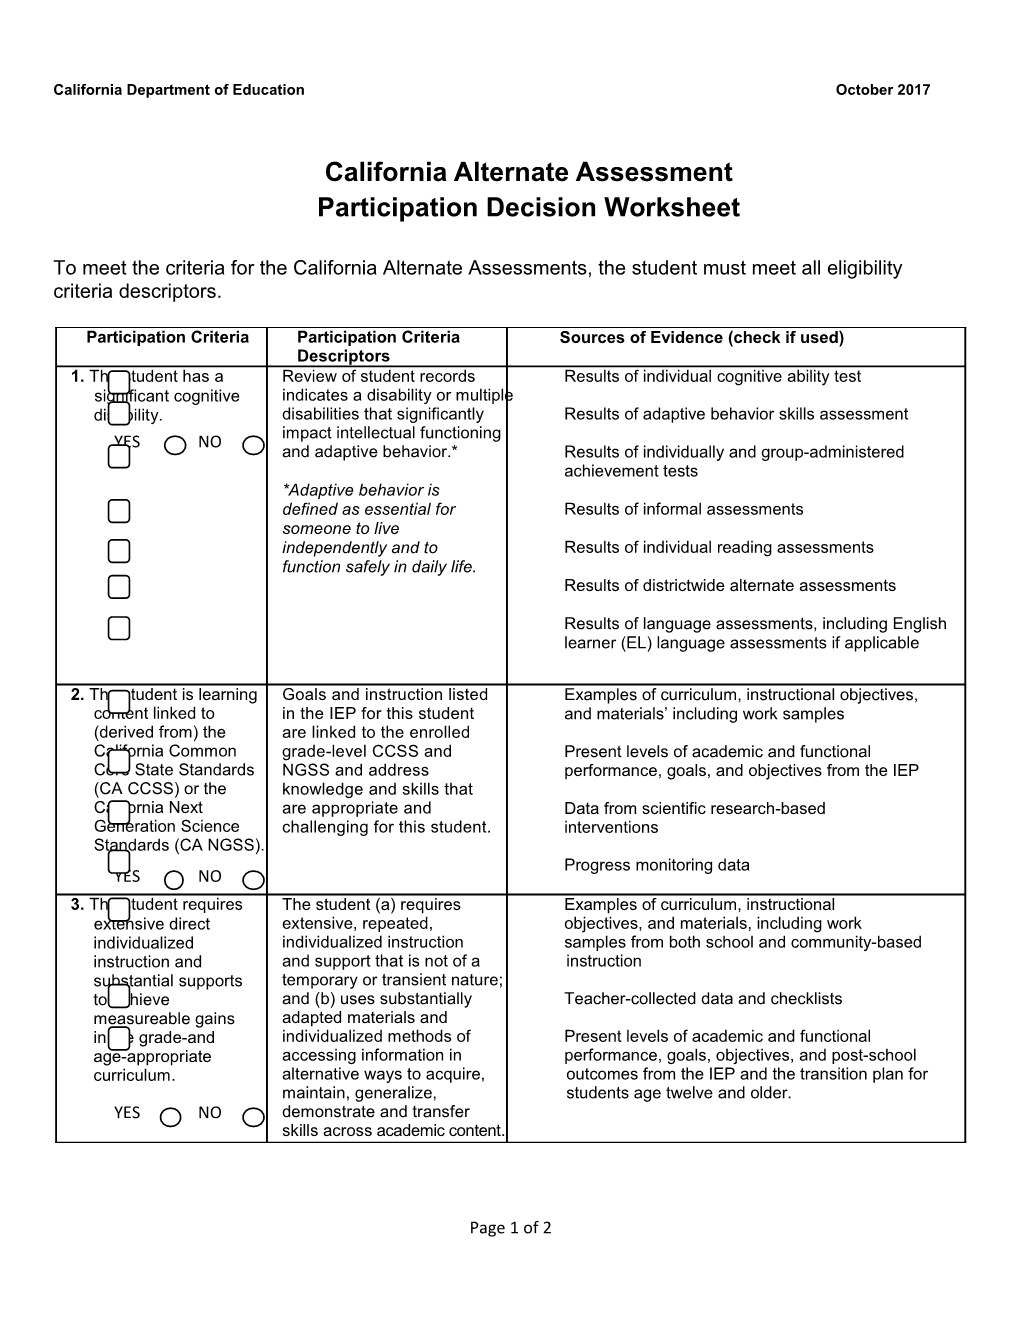 CAA Participation Worksheet - CAASPP (CA Dept of Education)